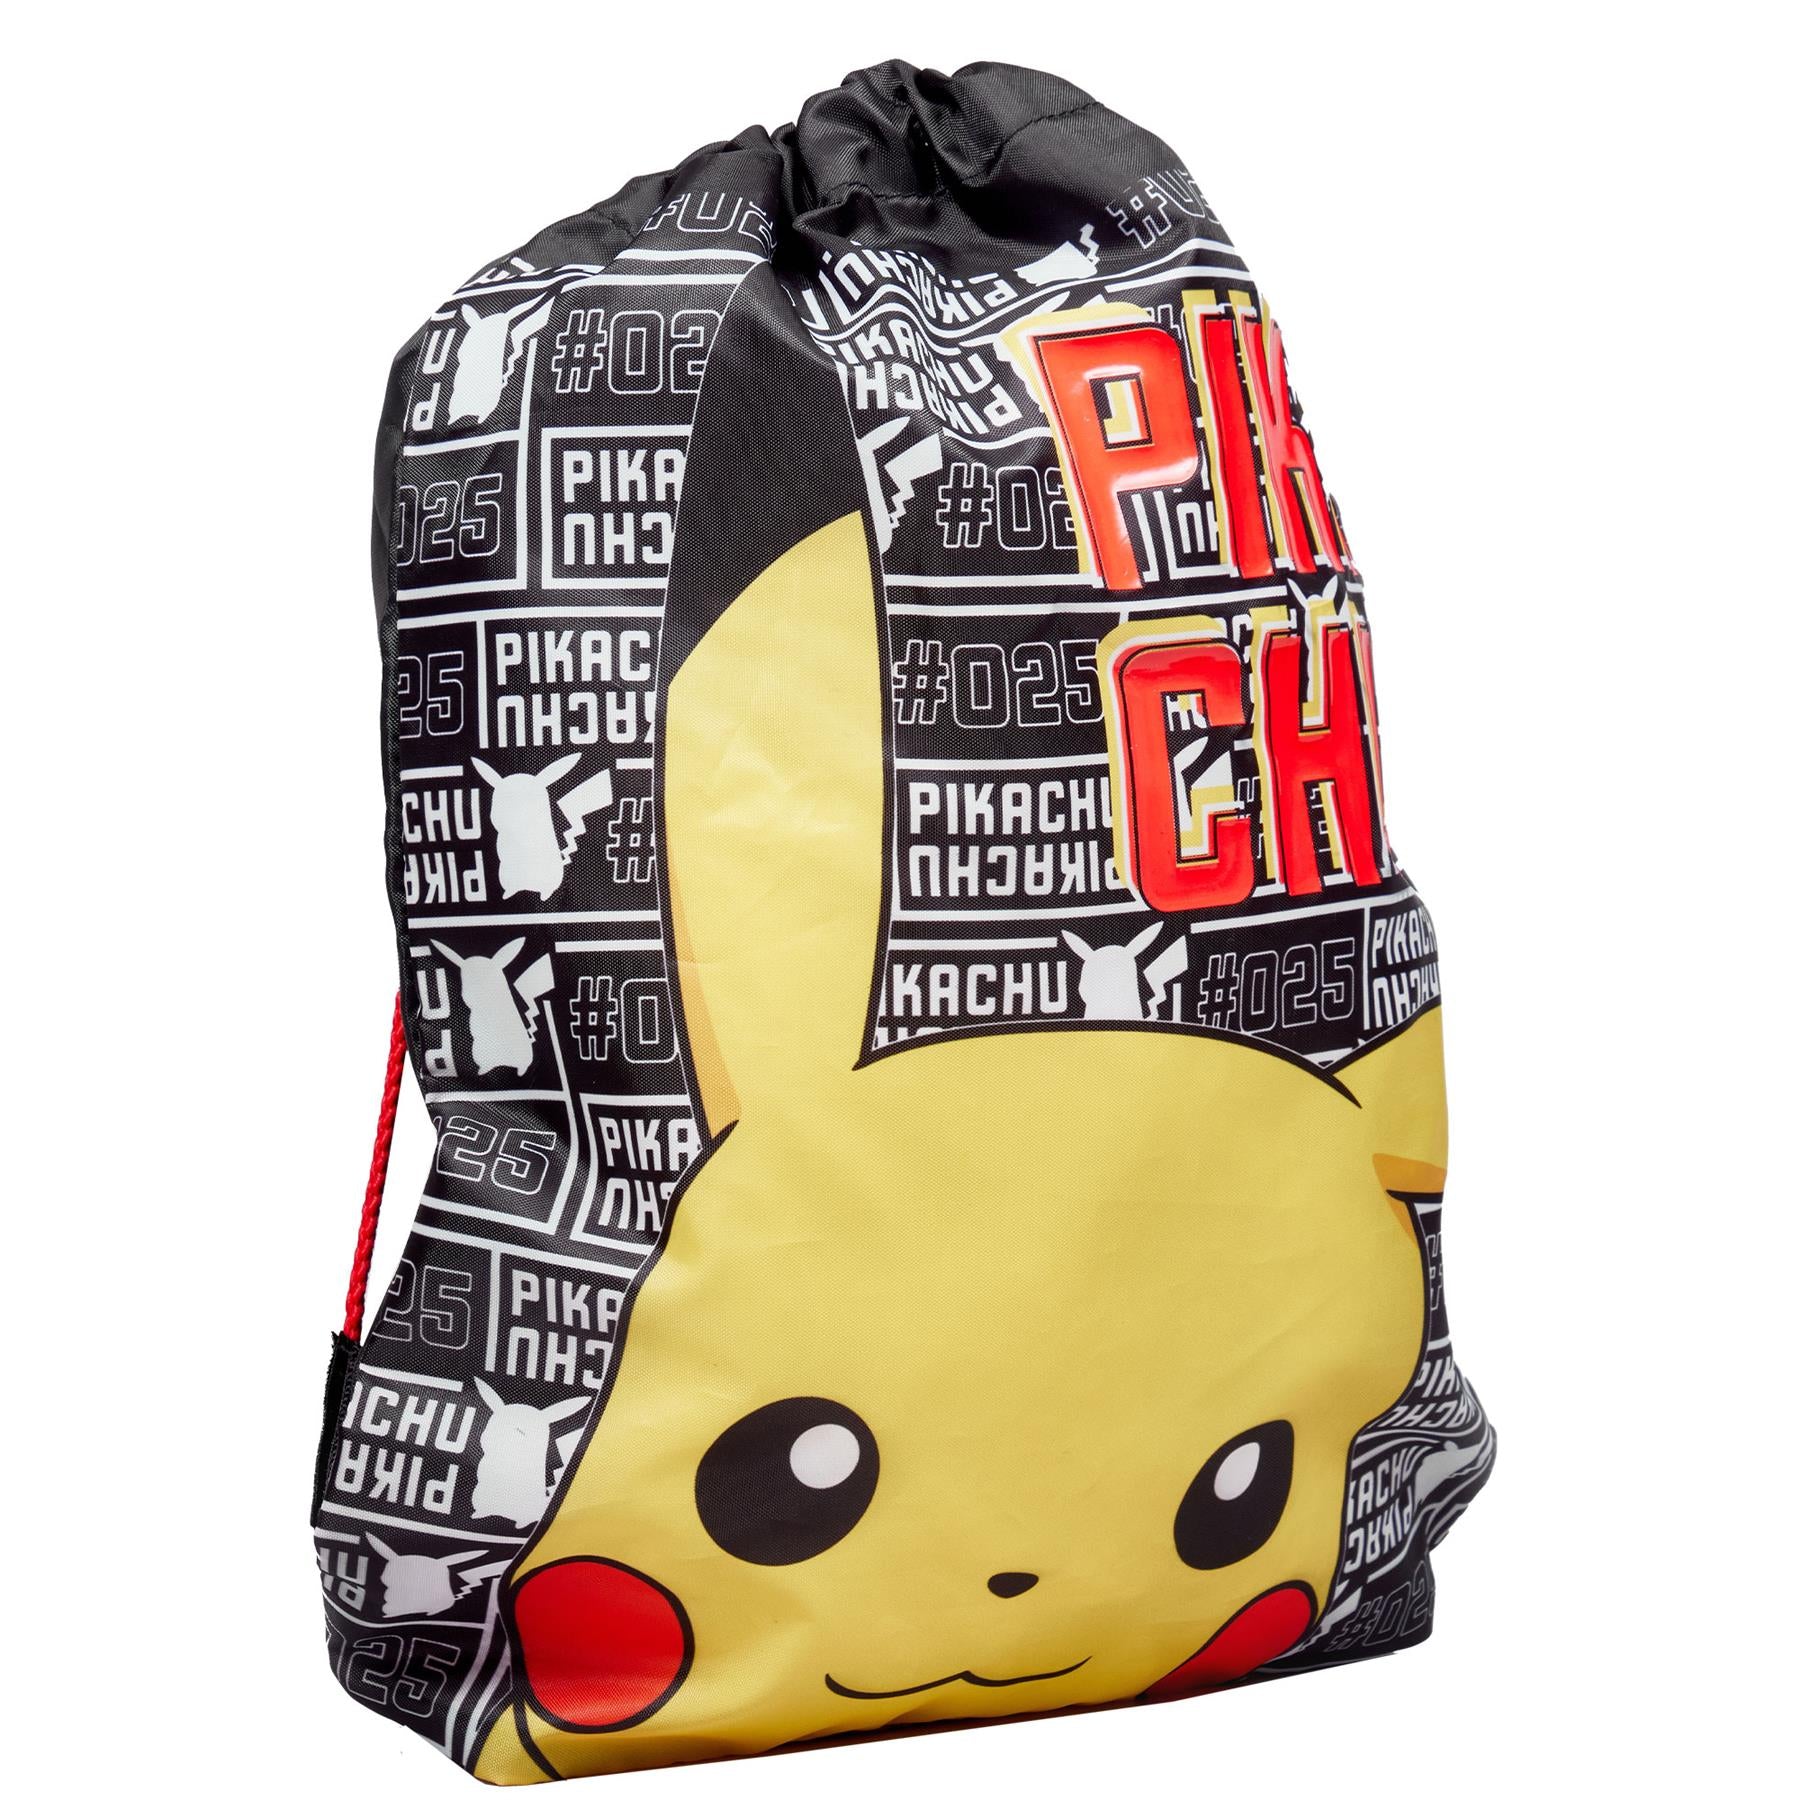 Officially Licensed Pokemon Pikachu Eva Character Trainer Bag Drawstring Gym Bag